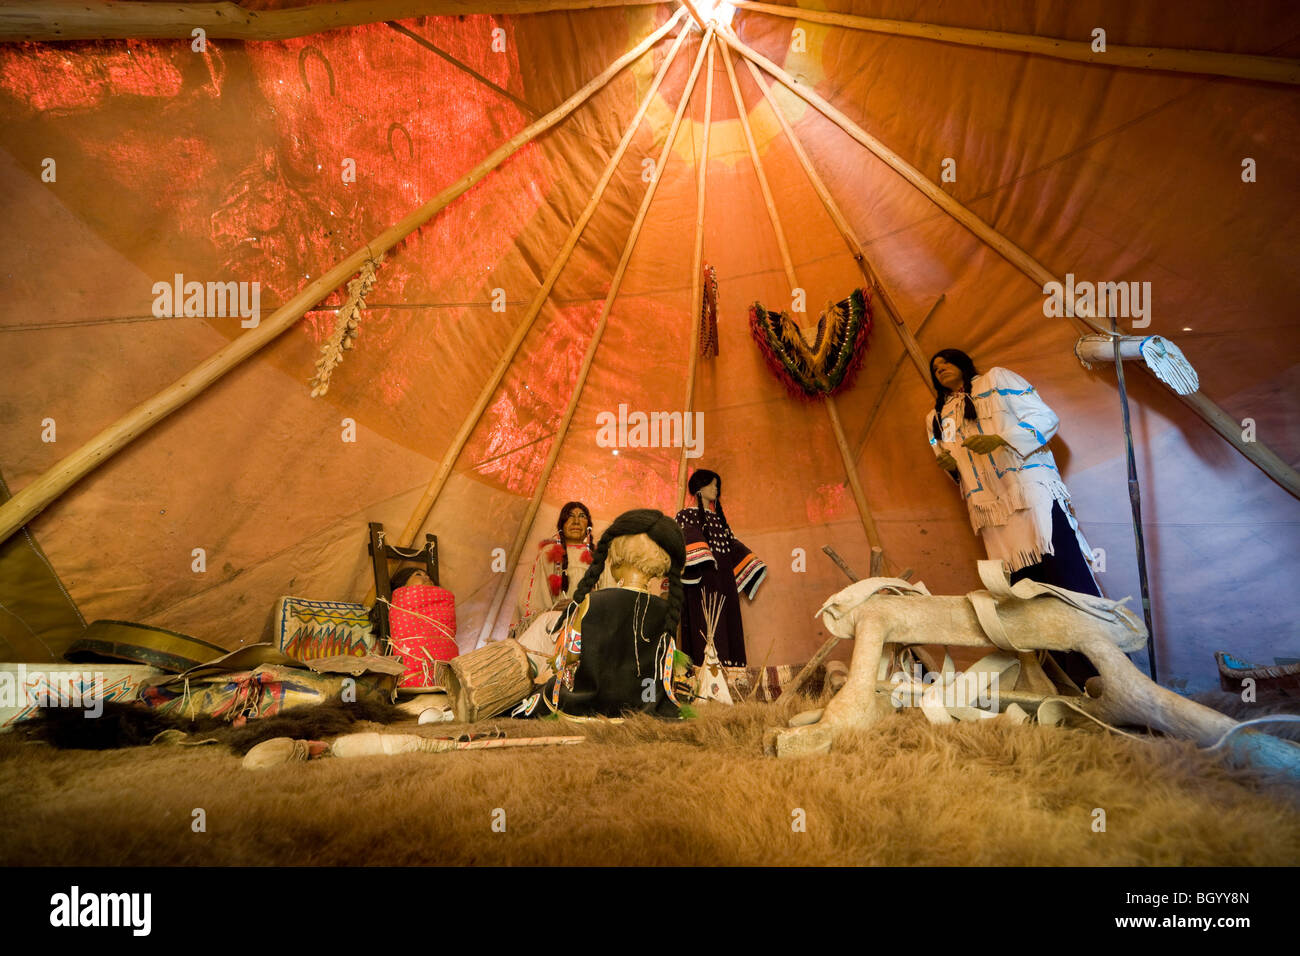 Im Inneren ein Lakota Indianer Tipi, Tipi, Tipi. Museumsausstellung, Display, am Crazy Horse Memorial, South Dakota. Stockfoto